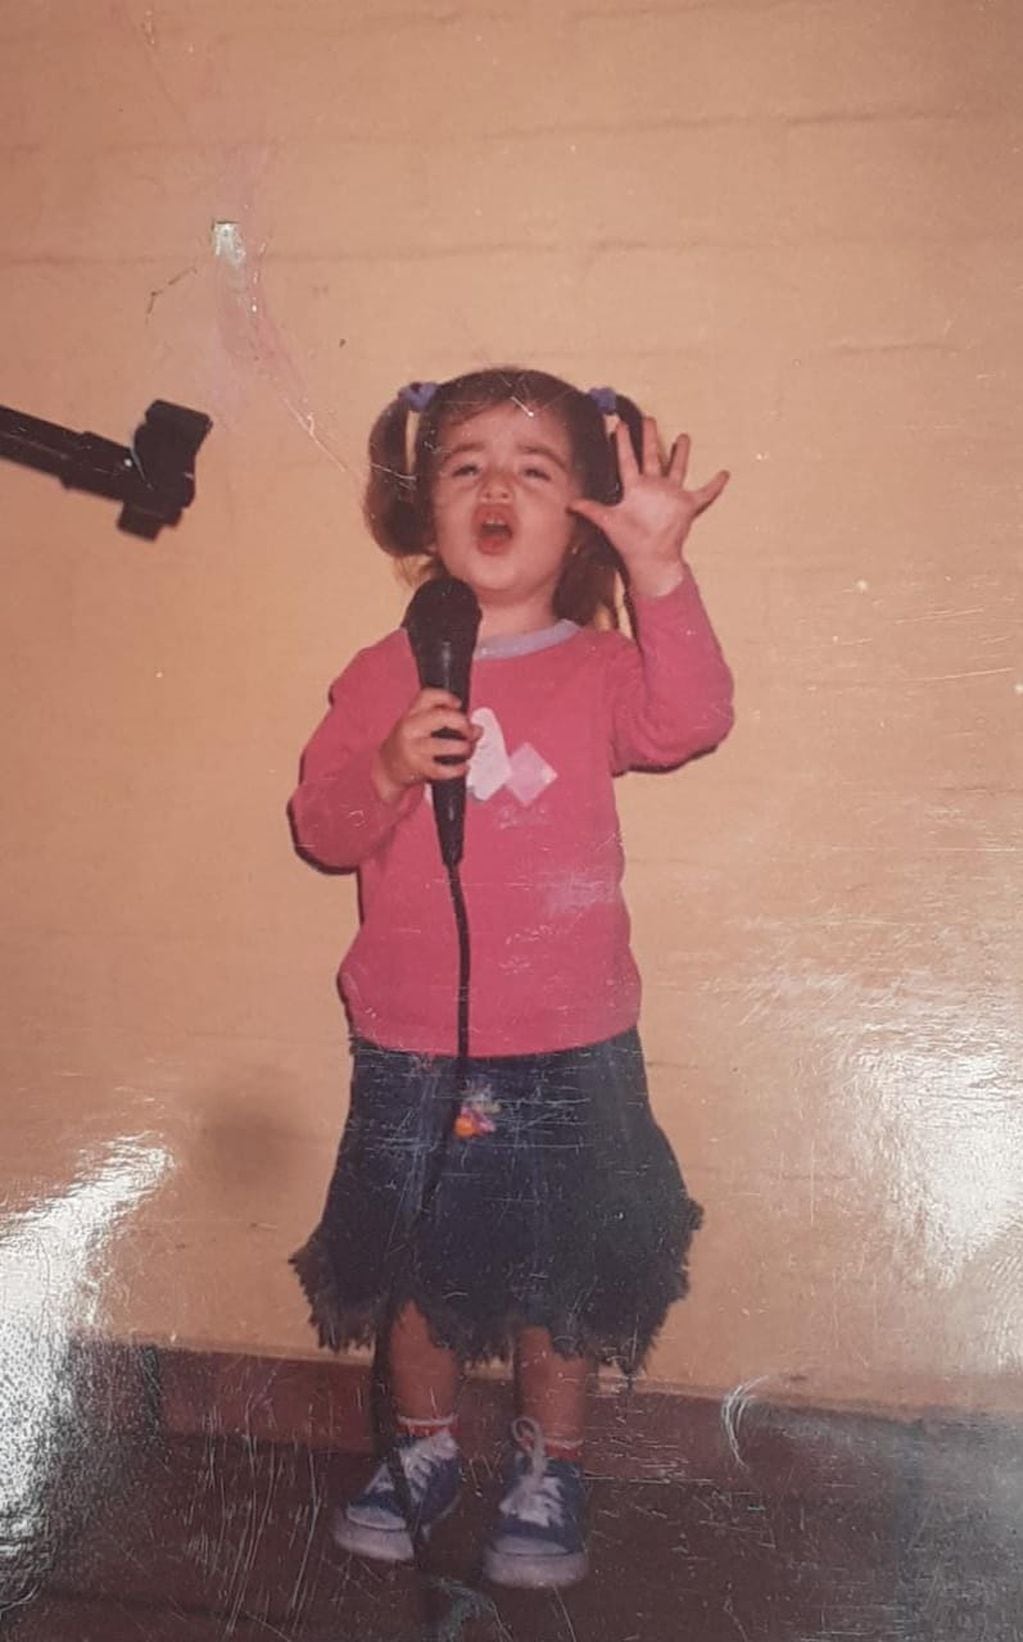 Desde niña, Victoria soñaba con sostener un micrófono arriba de un escenario.